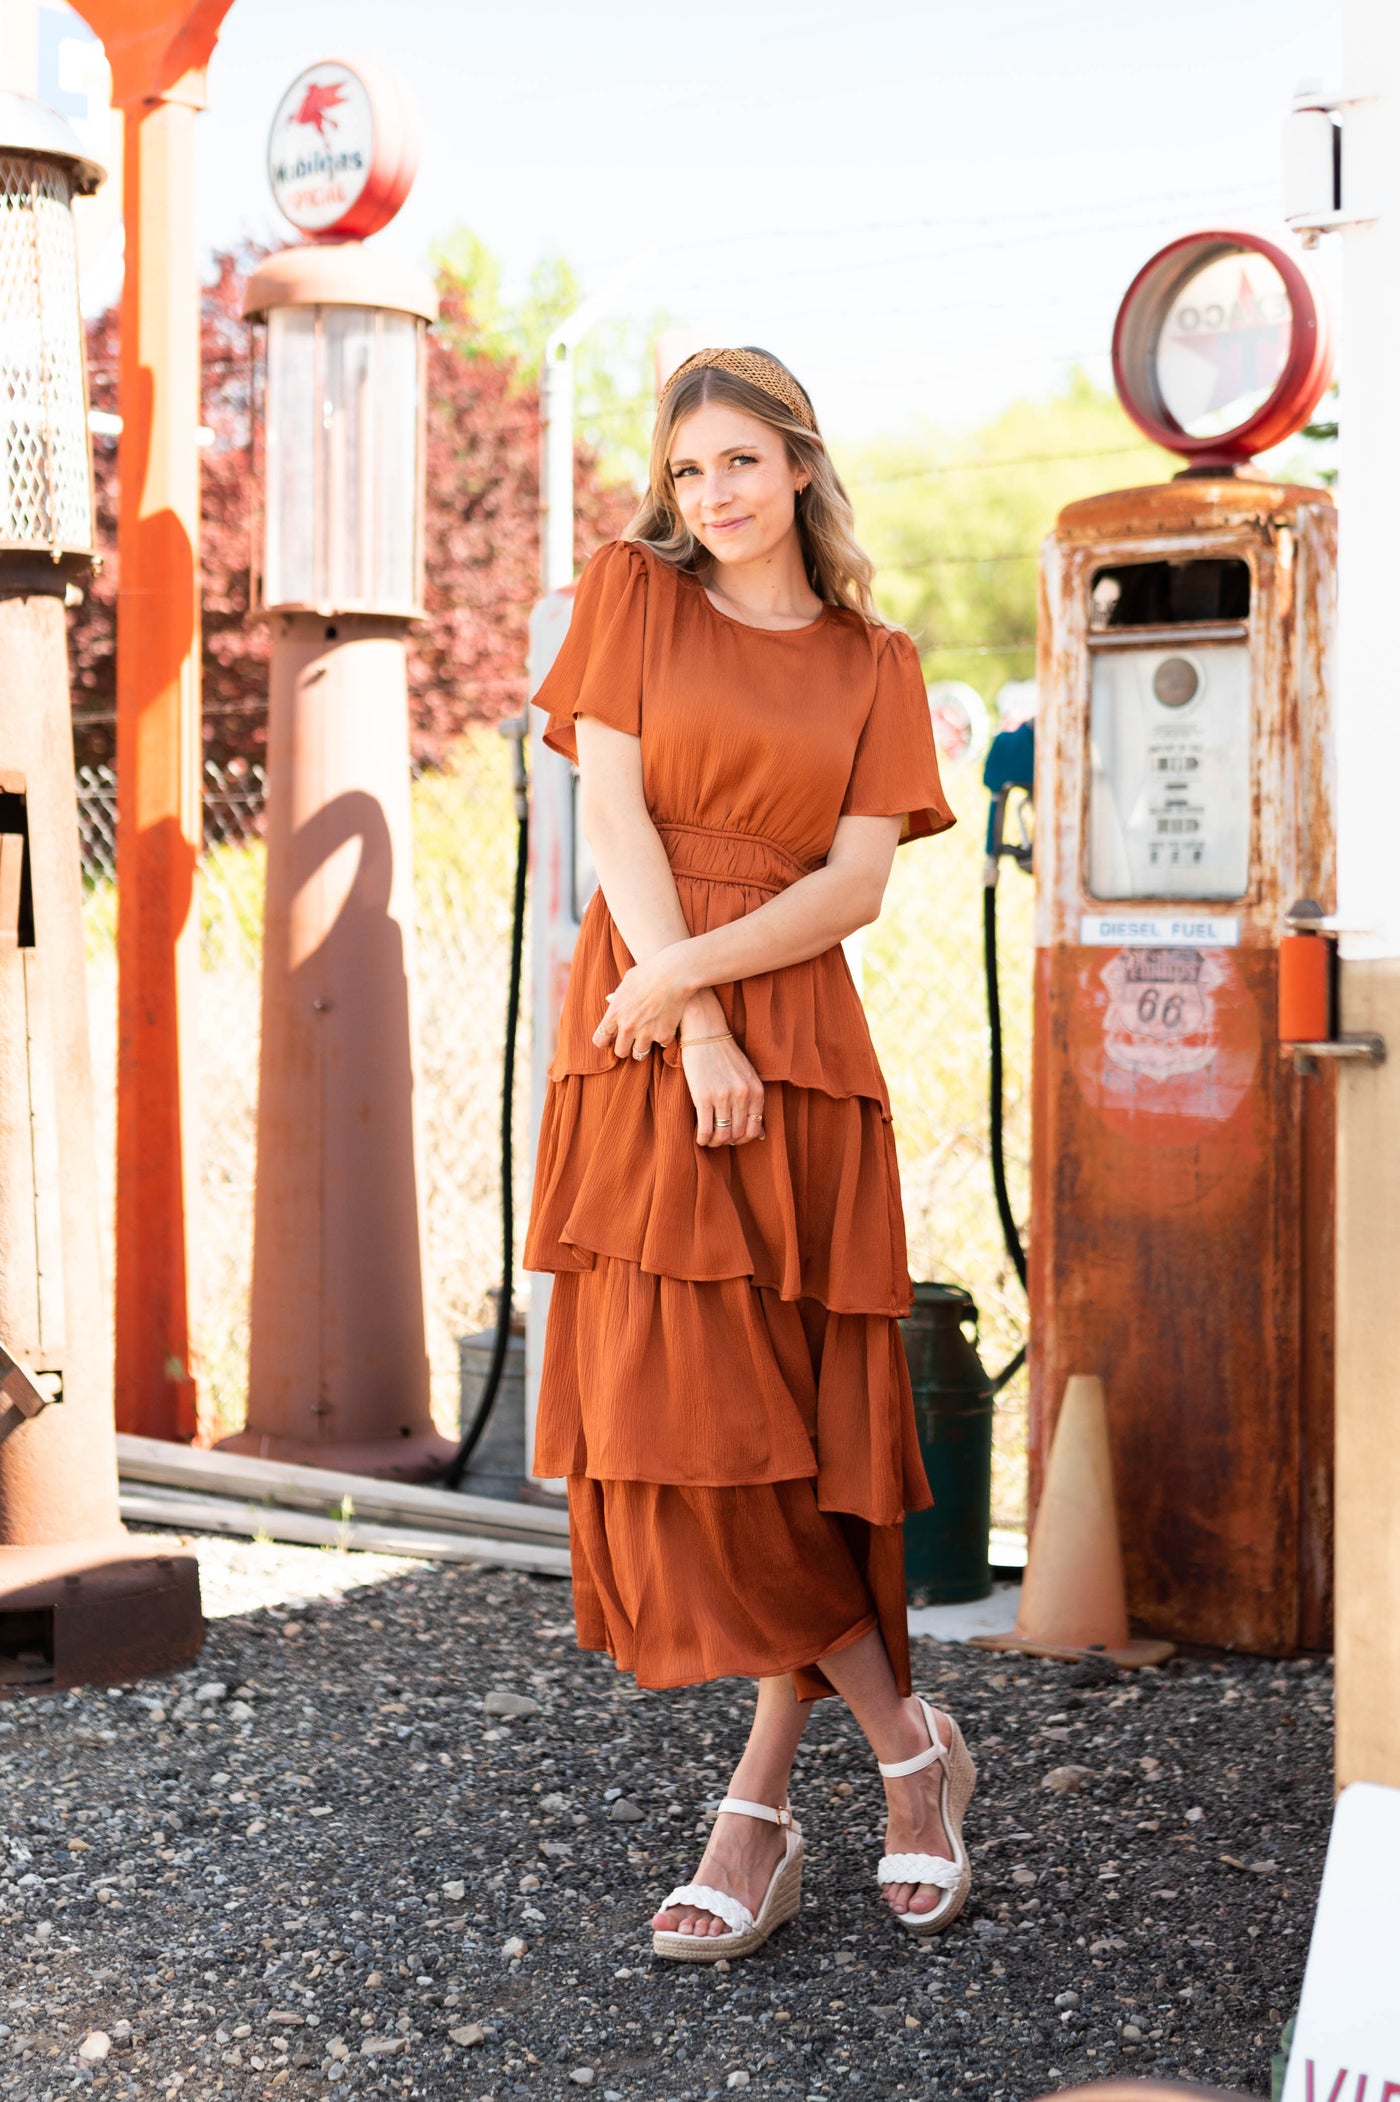 Short sleeve rust colored ruffle dress 